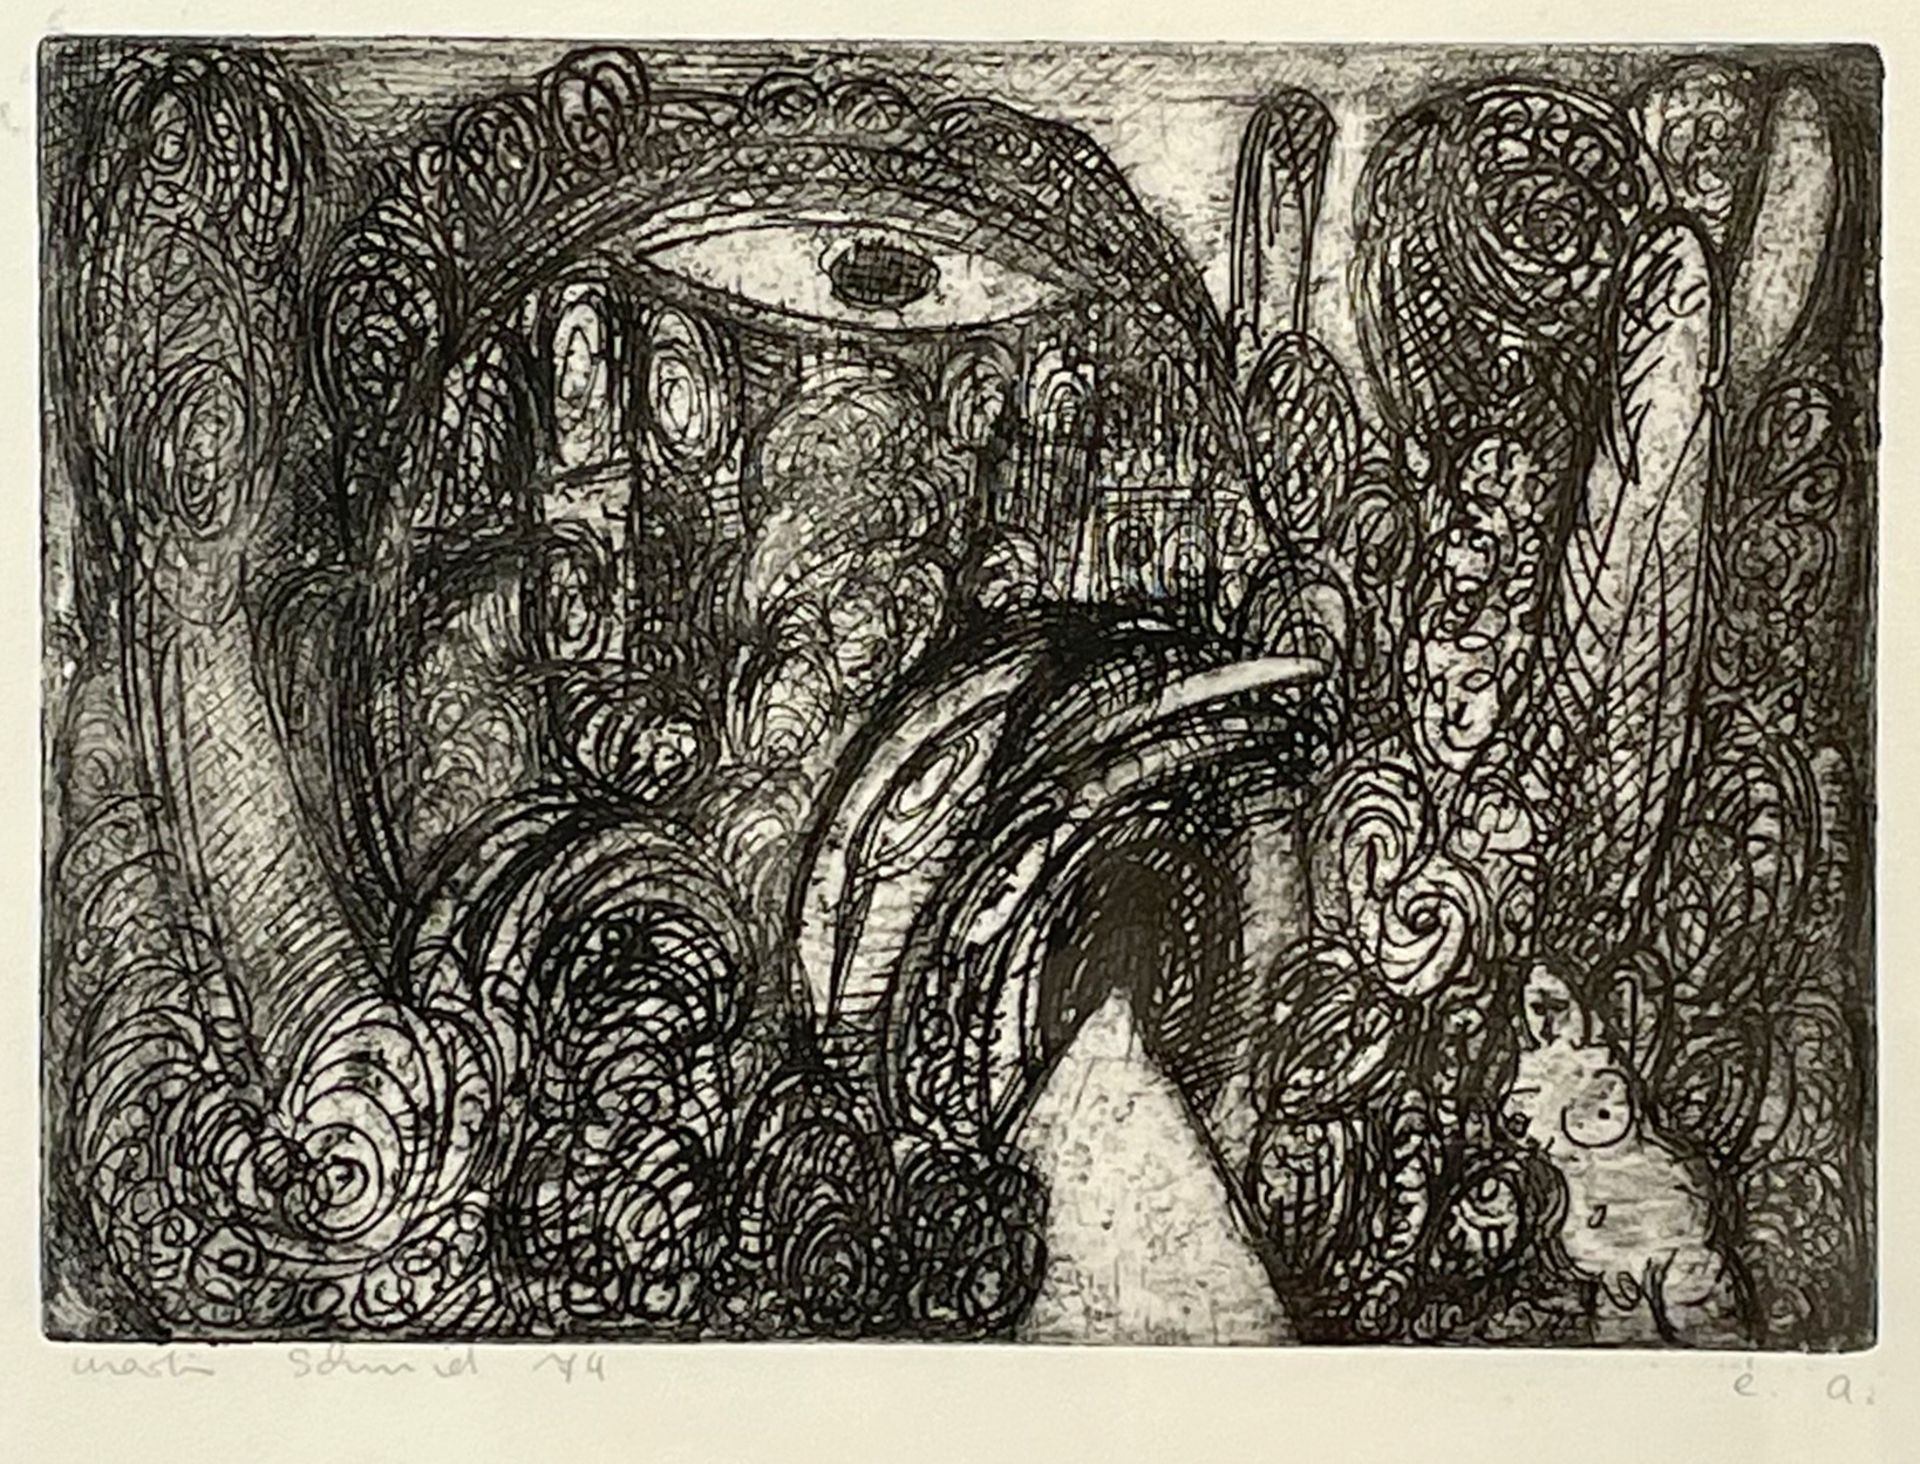 Martin SCHMIDT (geb. 1963). "Die Höhle" (1974).